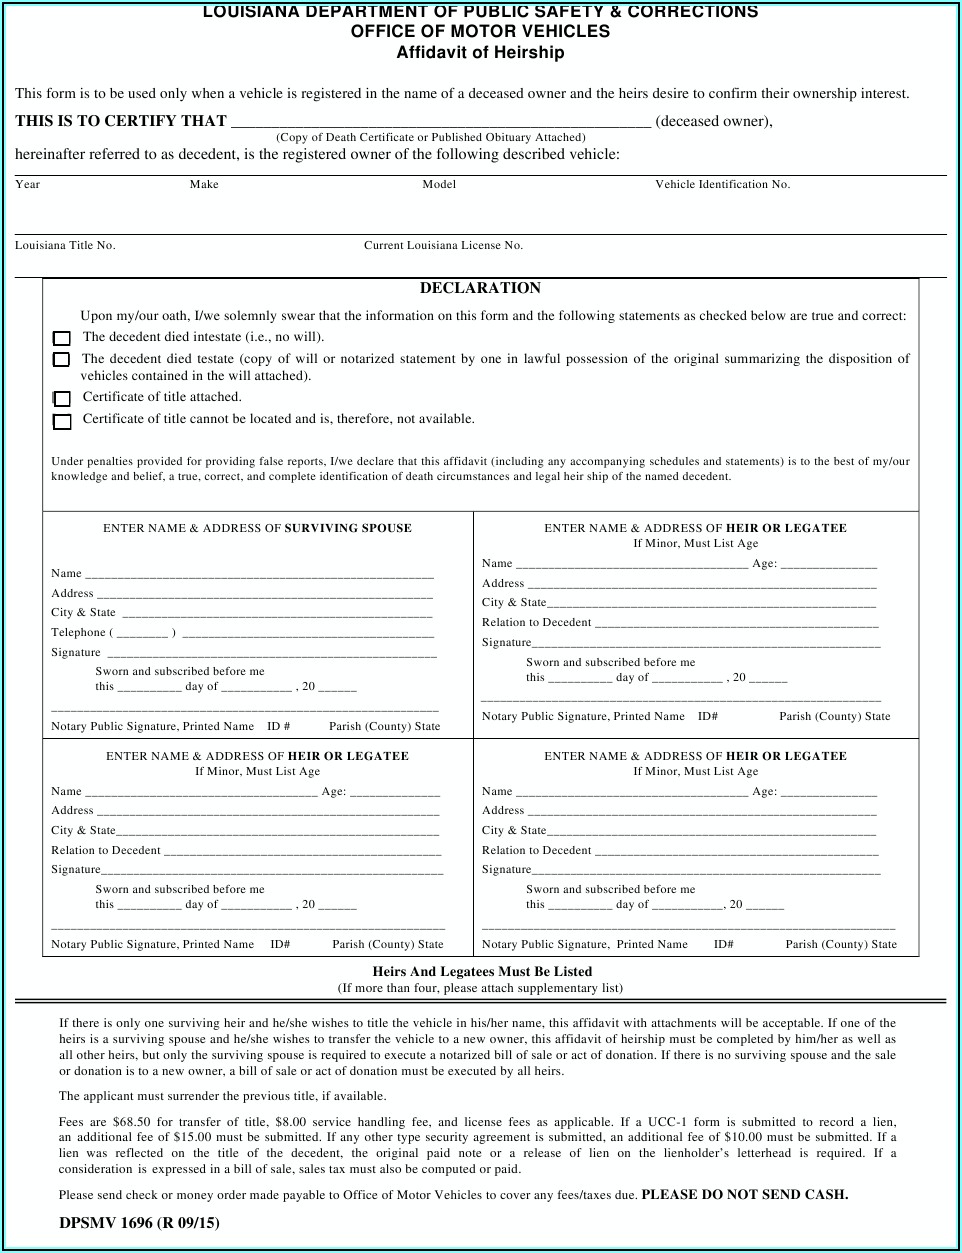 Heirship Affidavit Form Louisiana